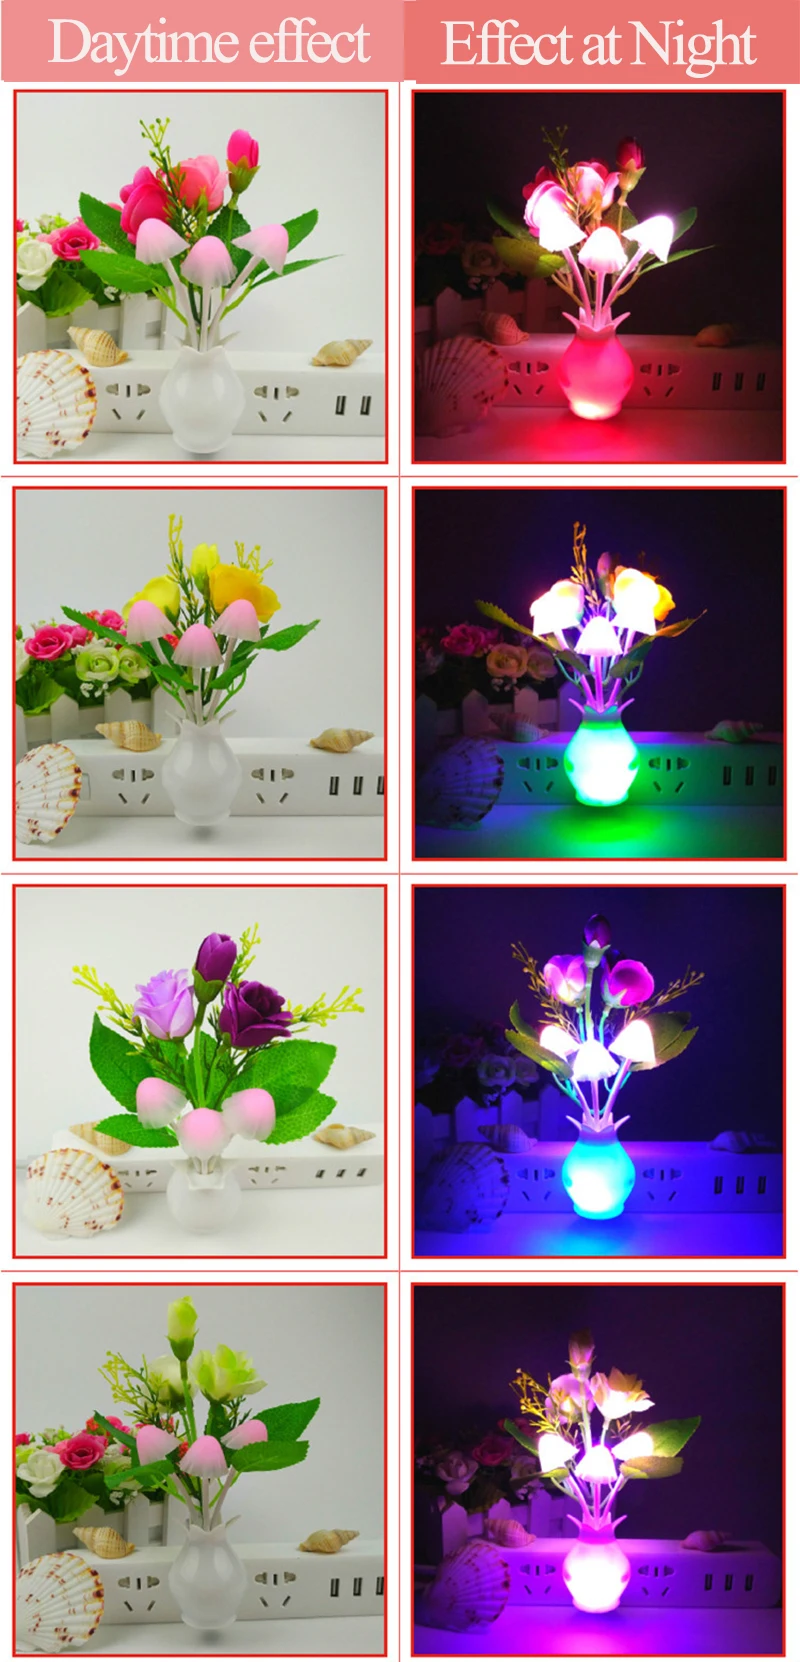 0.3W Light Control Smart led Night Light Home Decorative Flower Wall Lamp 110V-220V Bedside Lamp EU/US Plug For Hallway Pathway